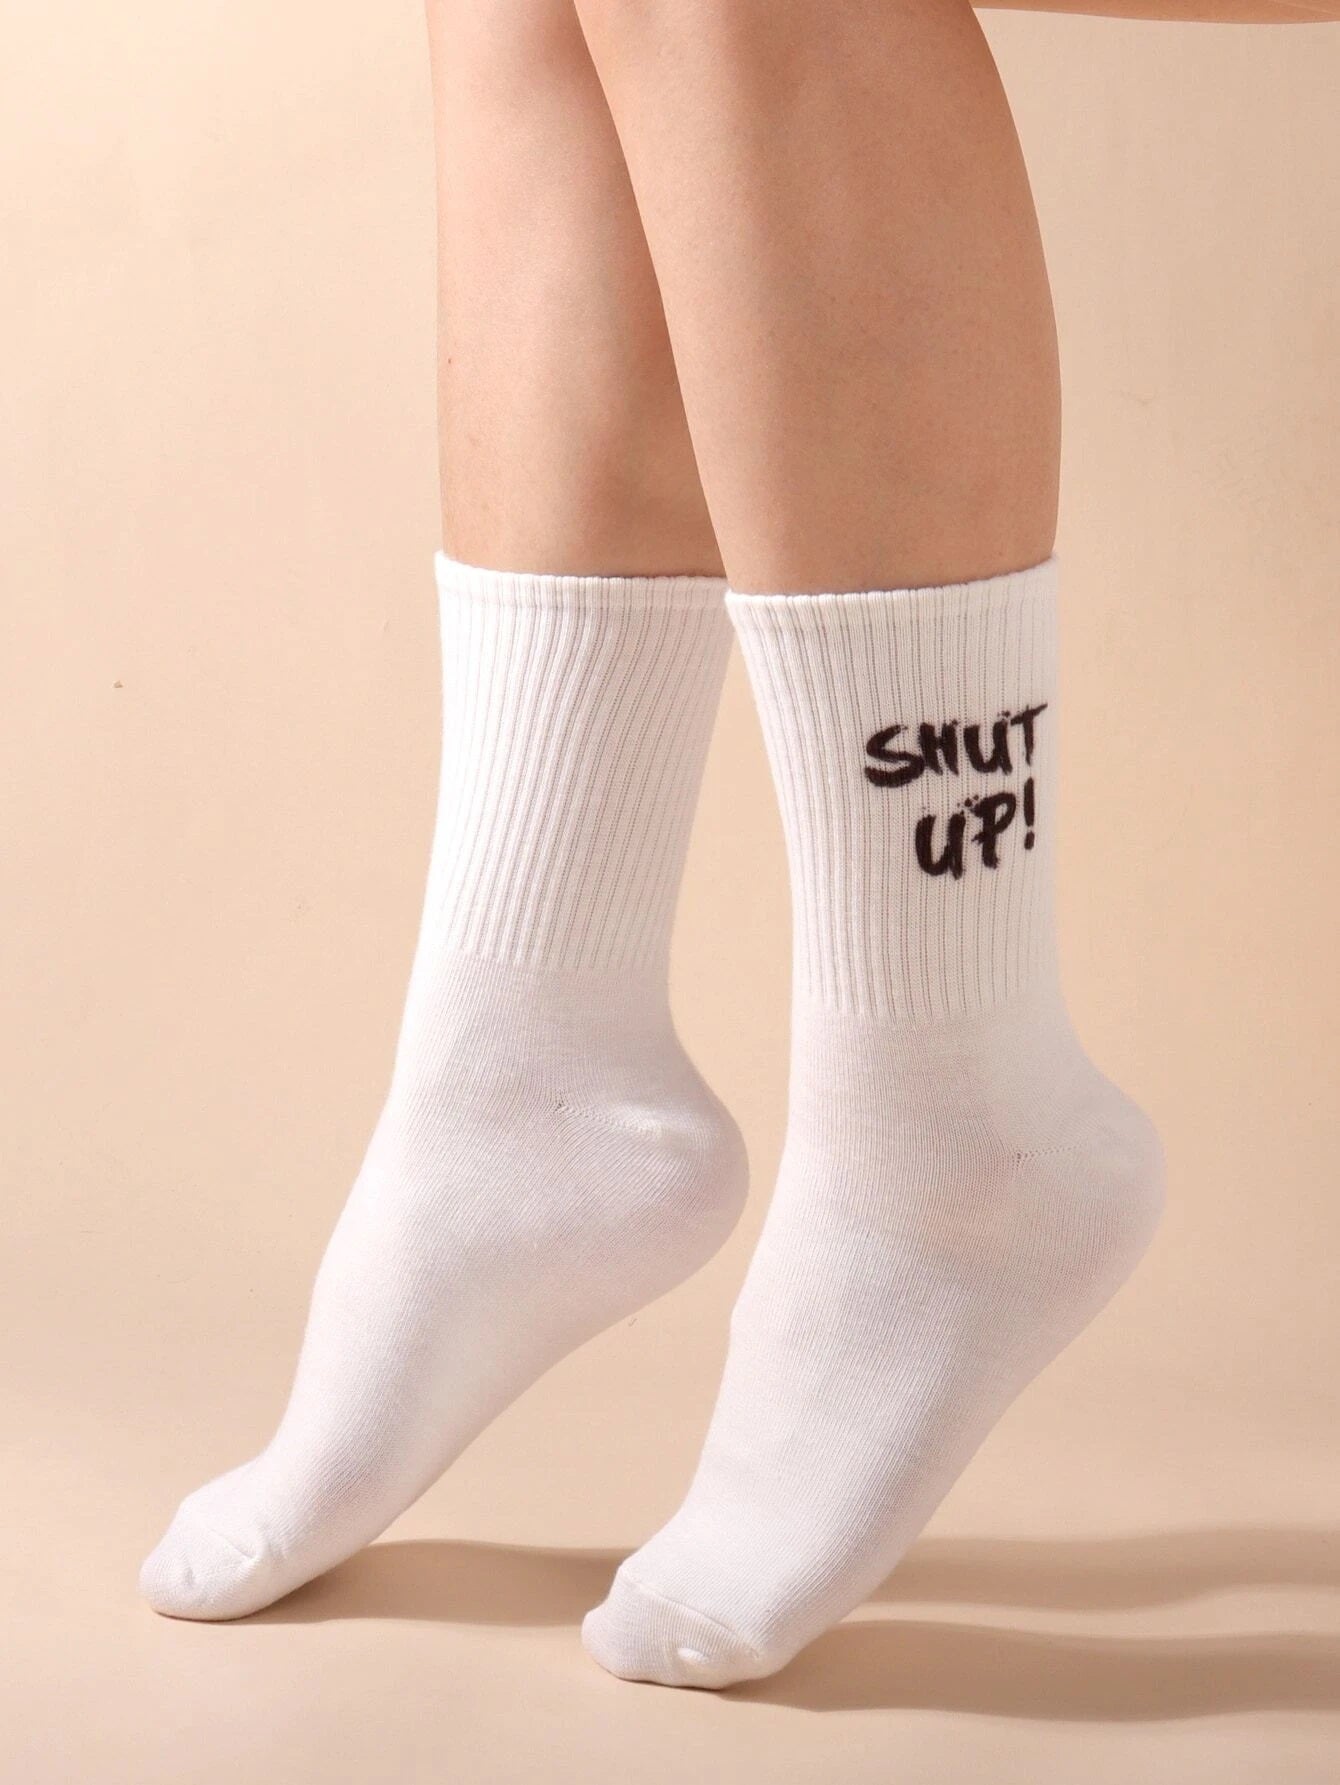 Shut Up Socks